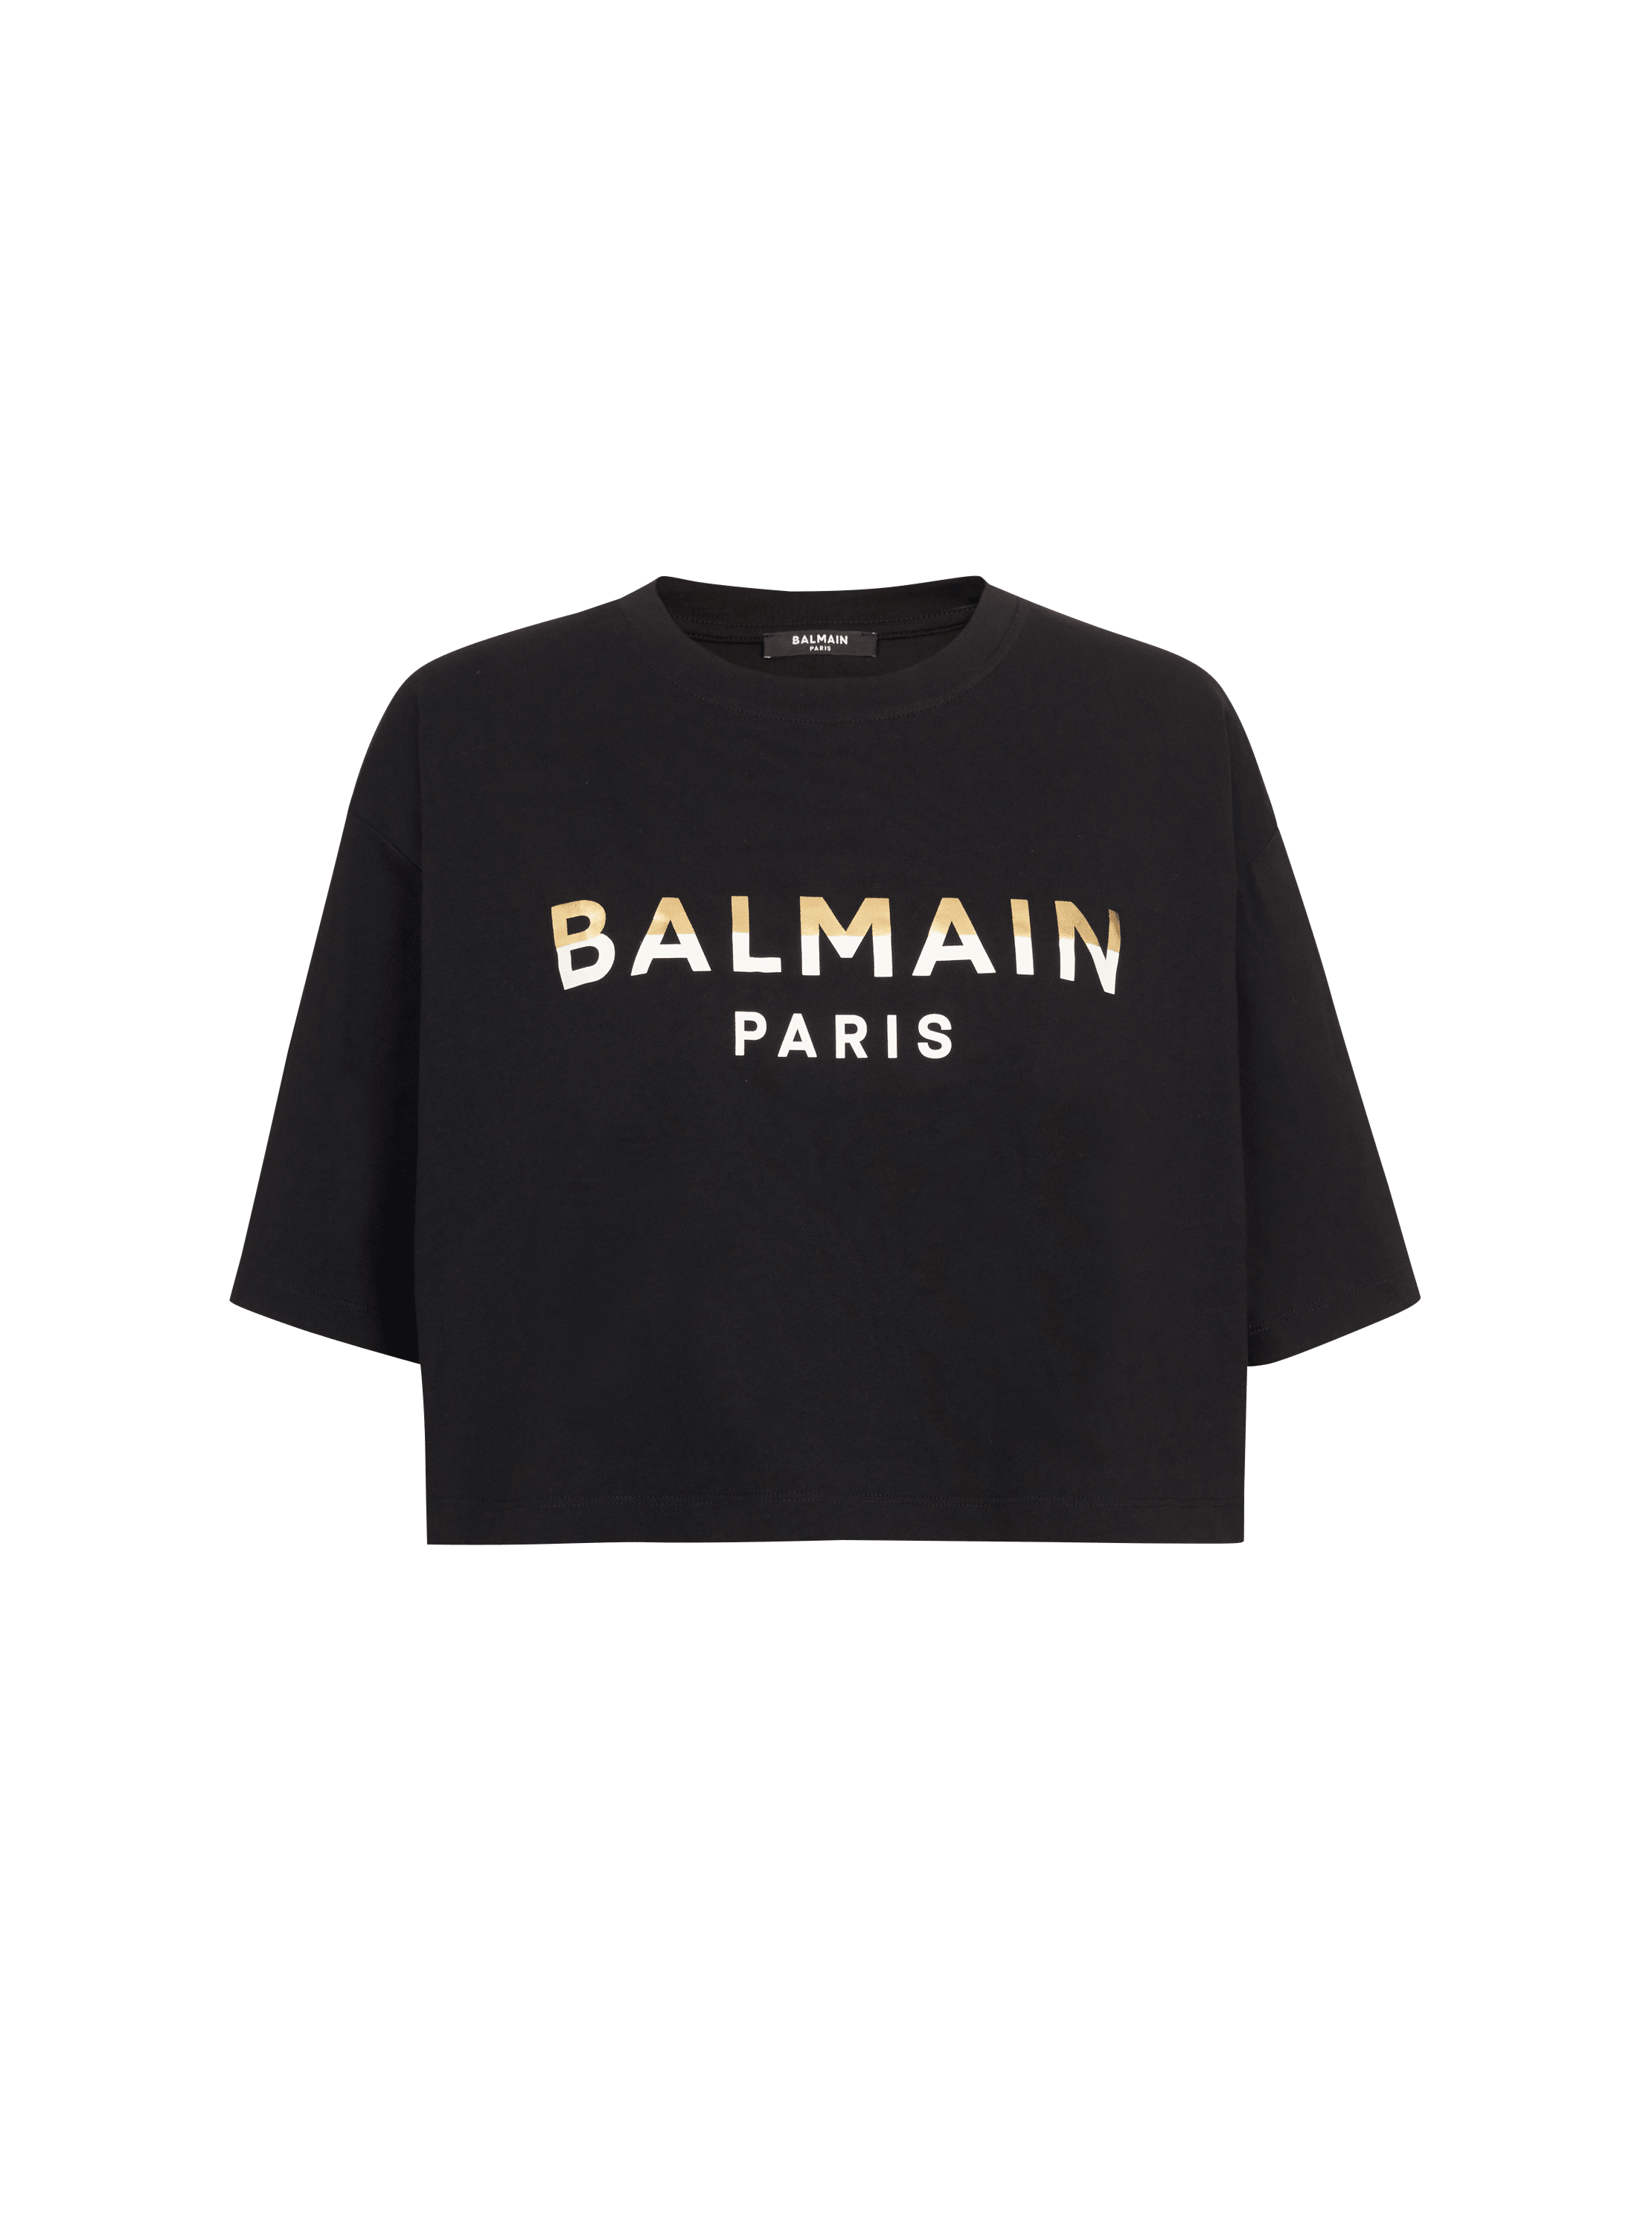 Balmain Paris 크롭 티셔츠